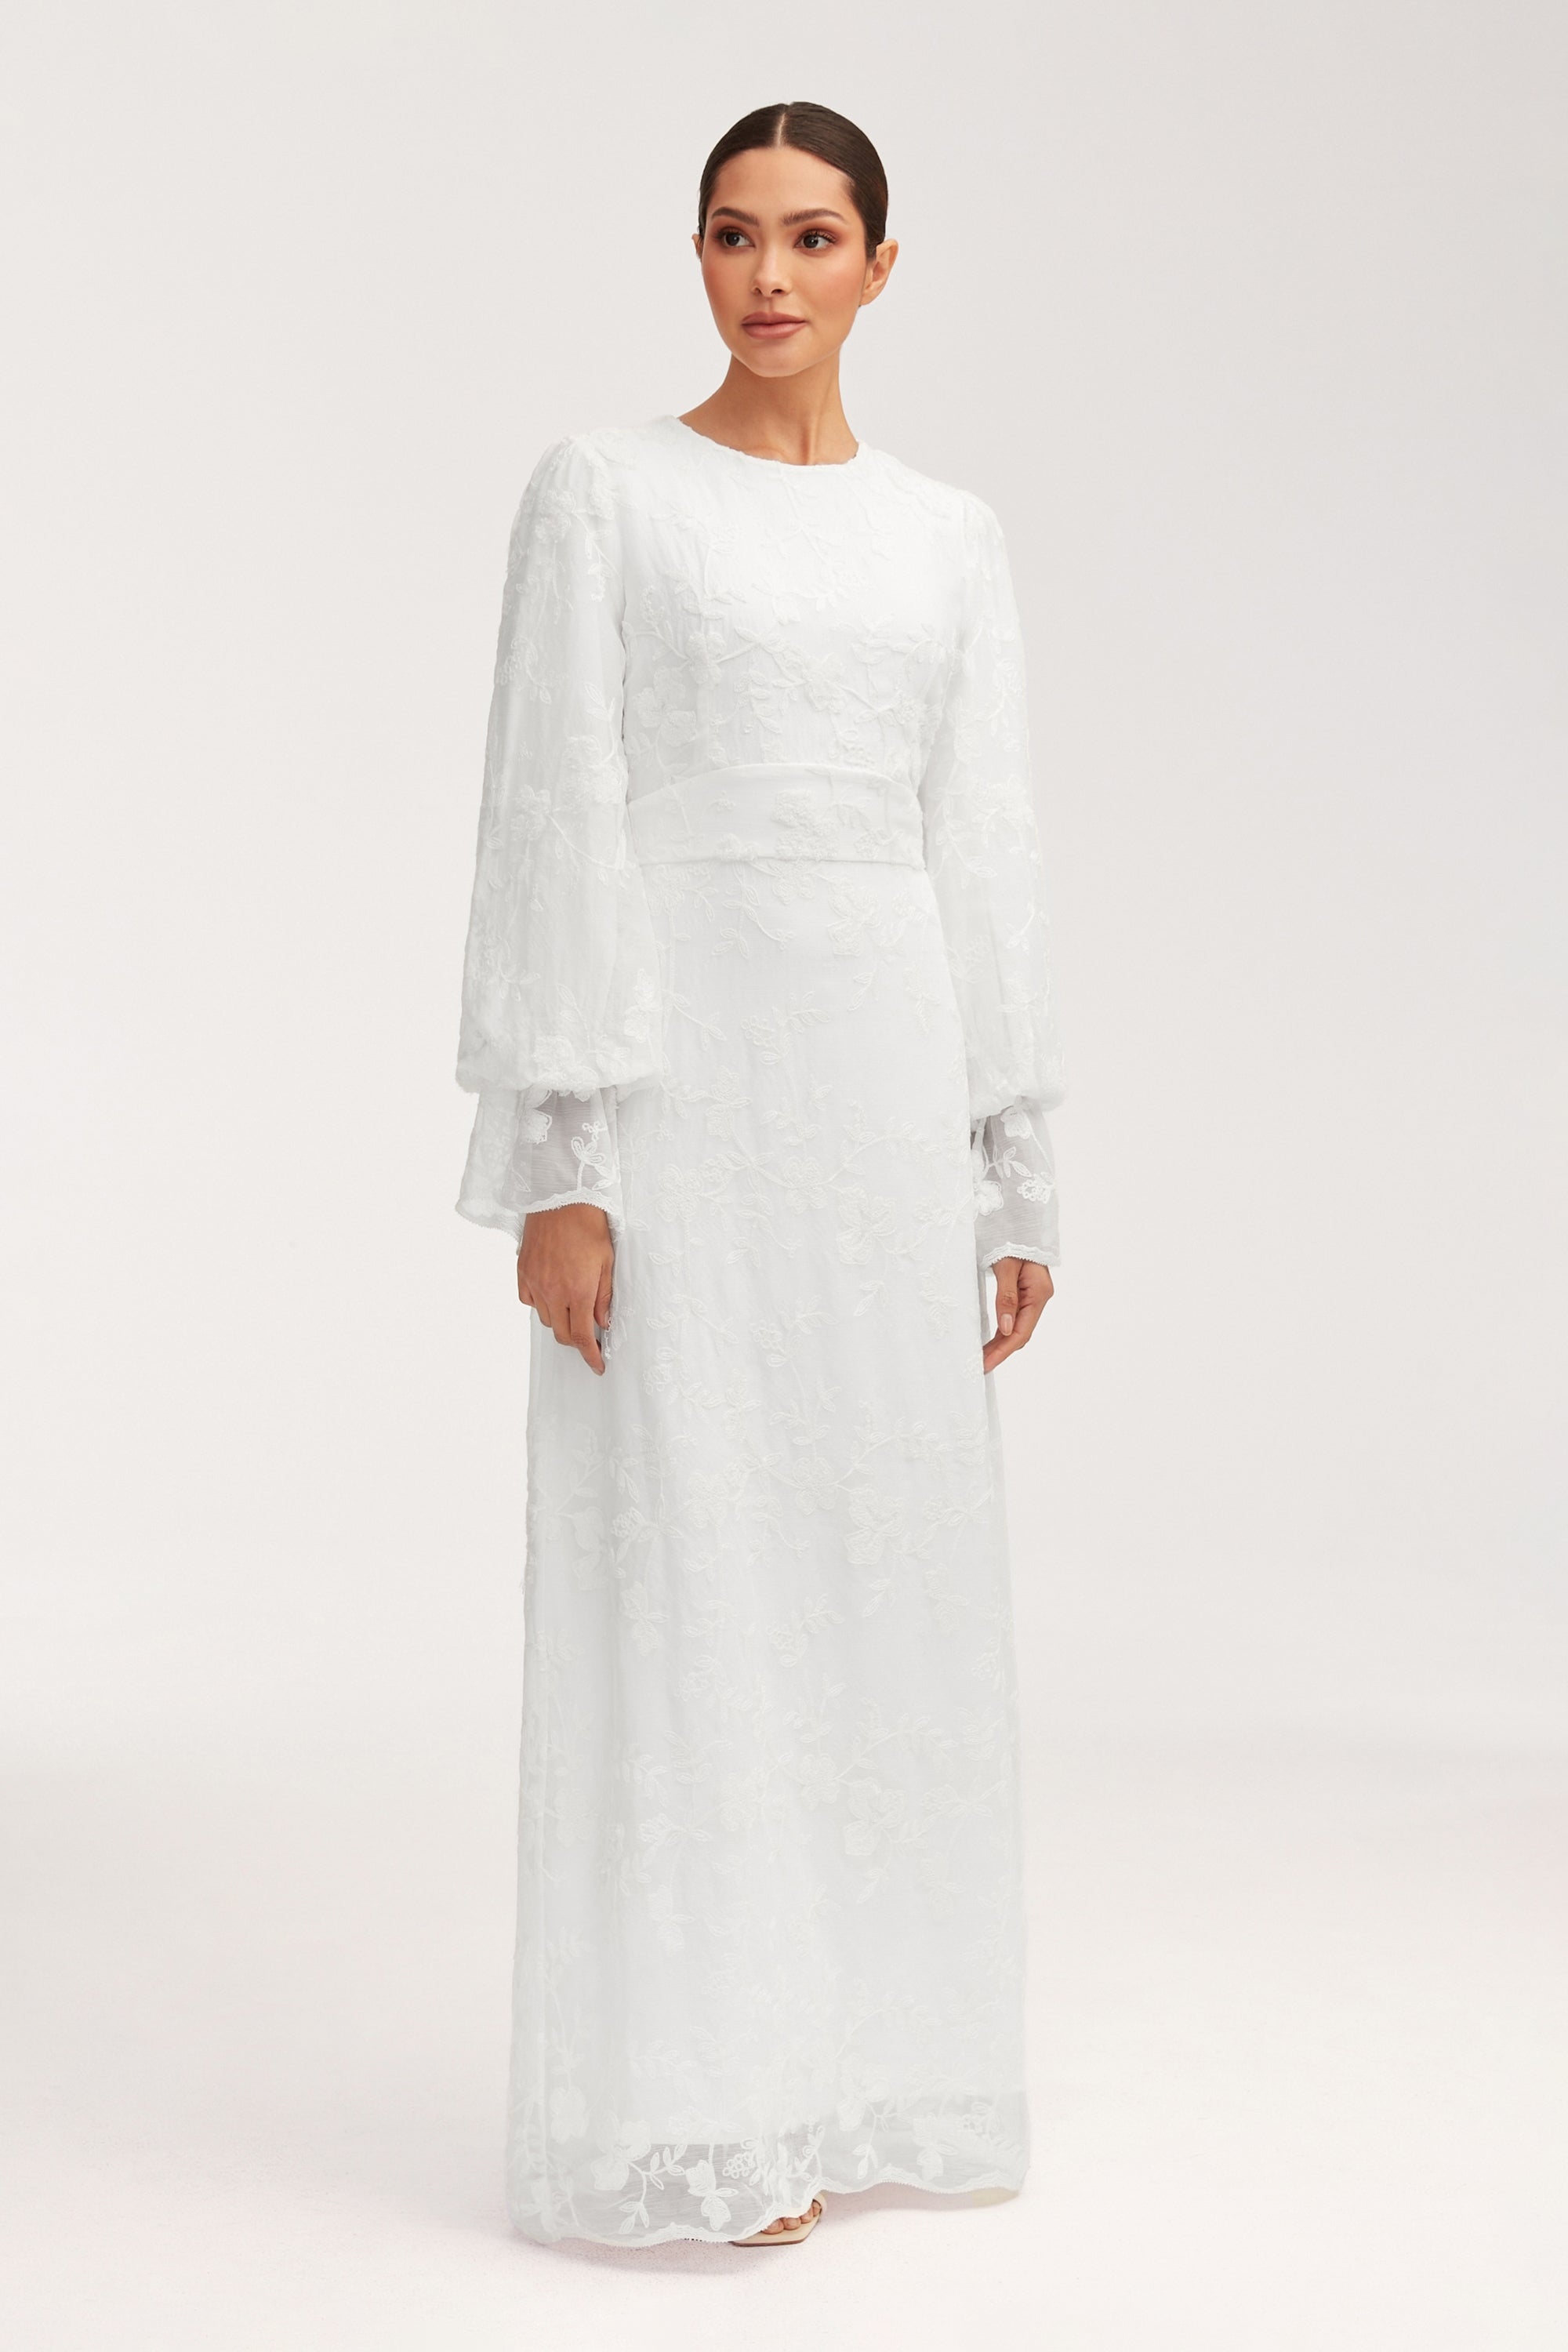 Romaissa White Lace Maxi Dress Clothing Veiled 